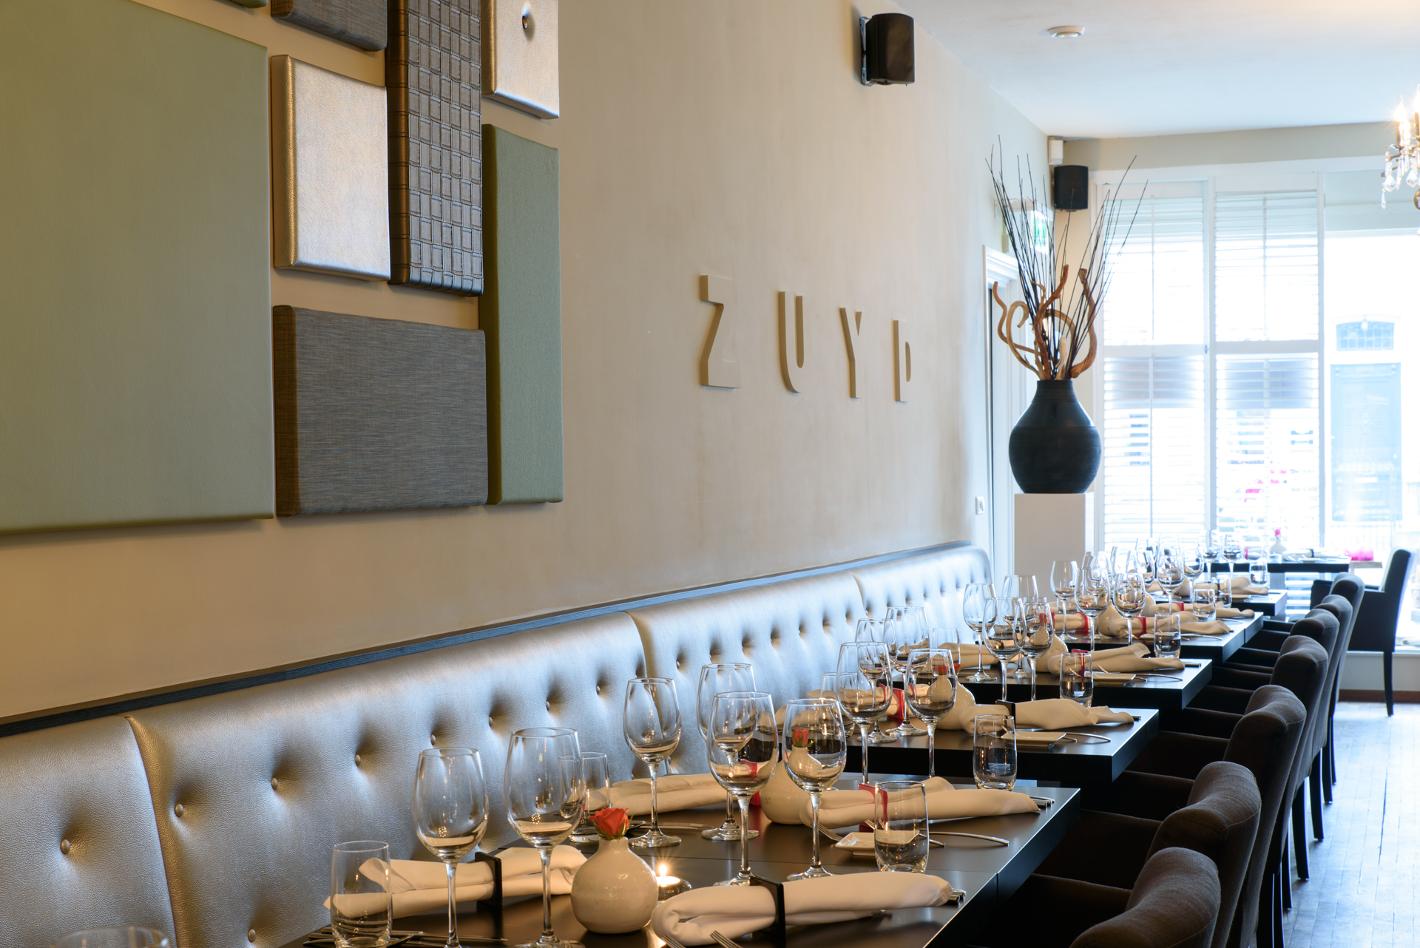 Photo Restaurant Zuyd in Breda, Eat & drink, Lunch, Dining - #2